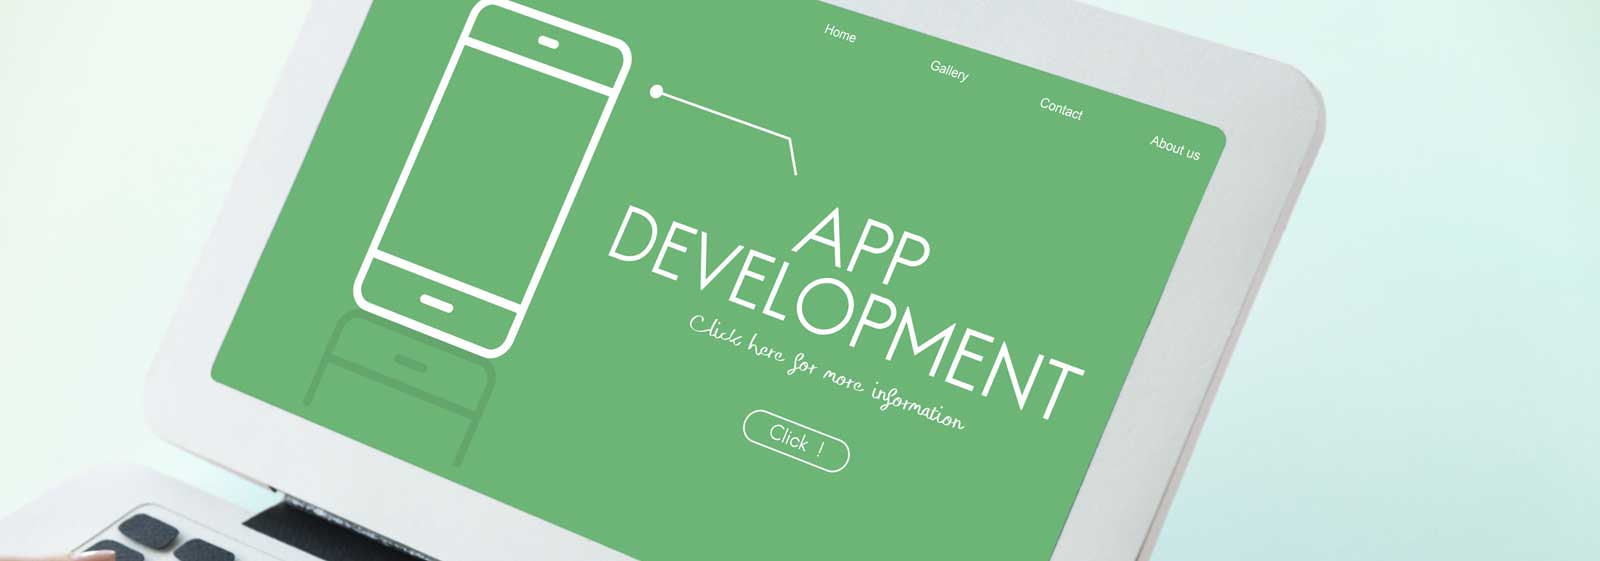 Ionic App Development Company Mumbai